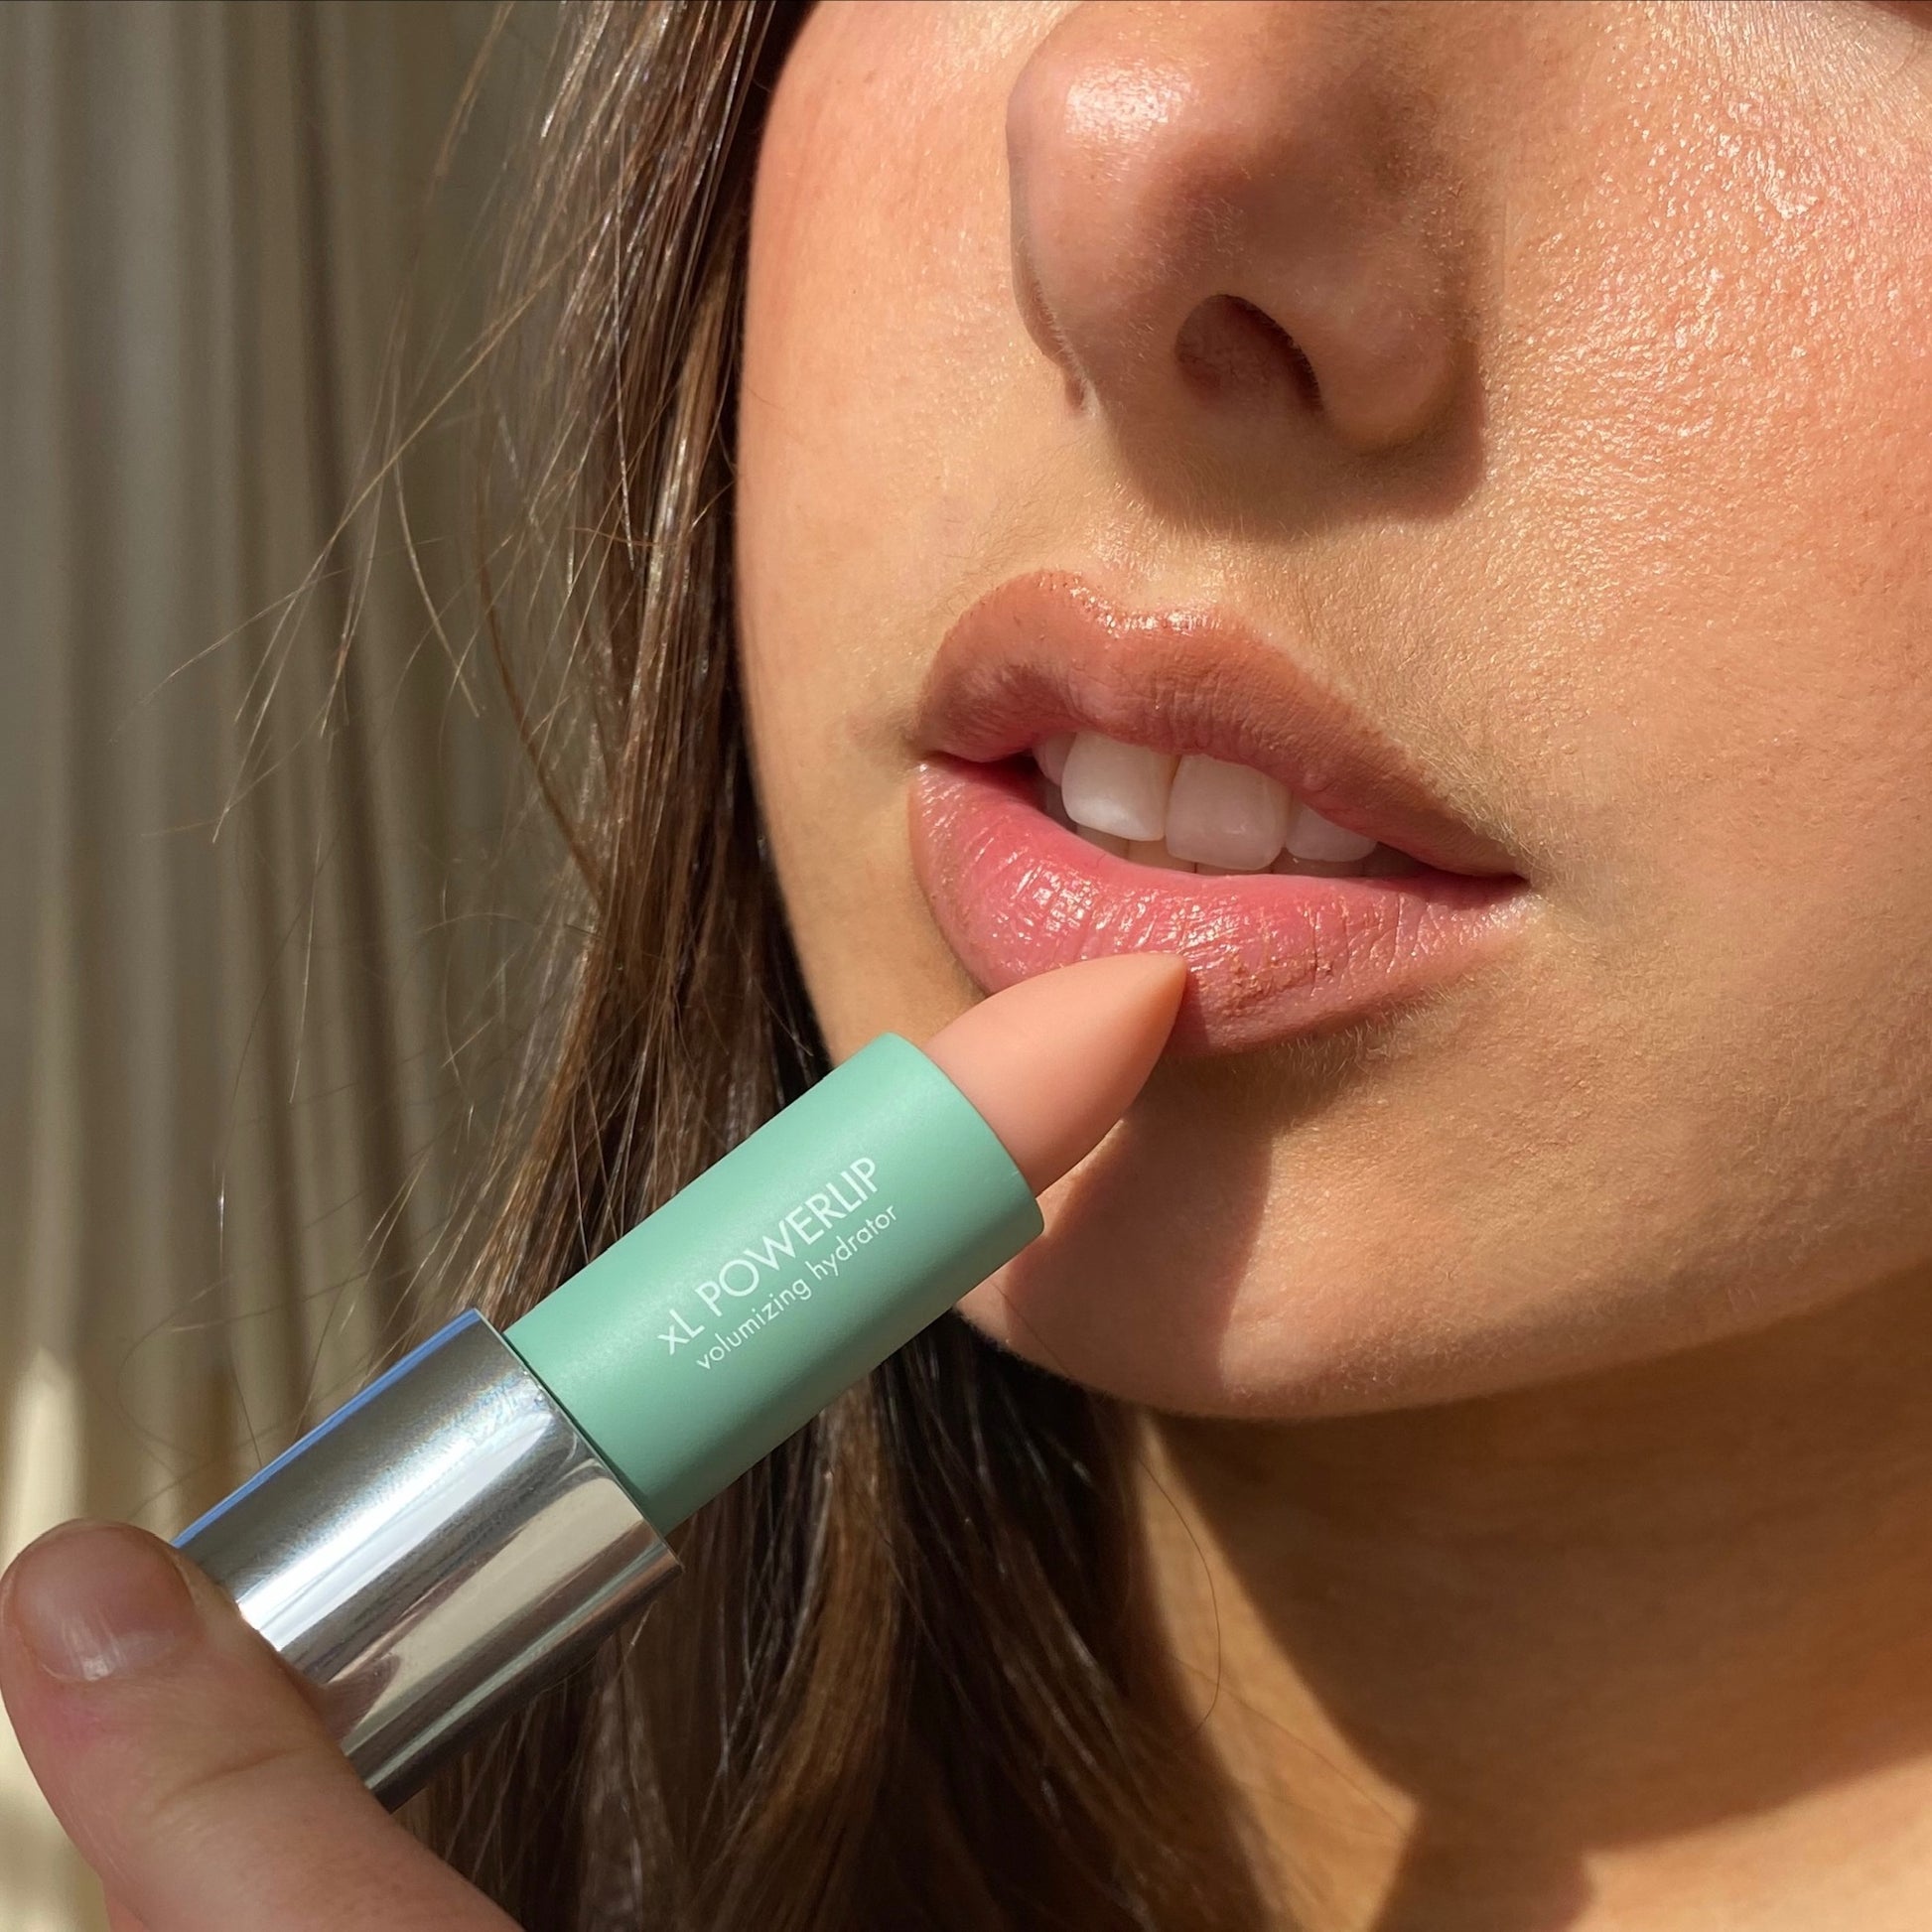 xL POWERLIP refillable lip treatment – Aloe Attiva